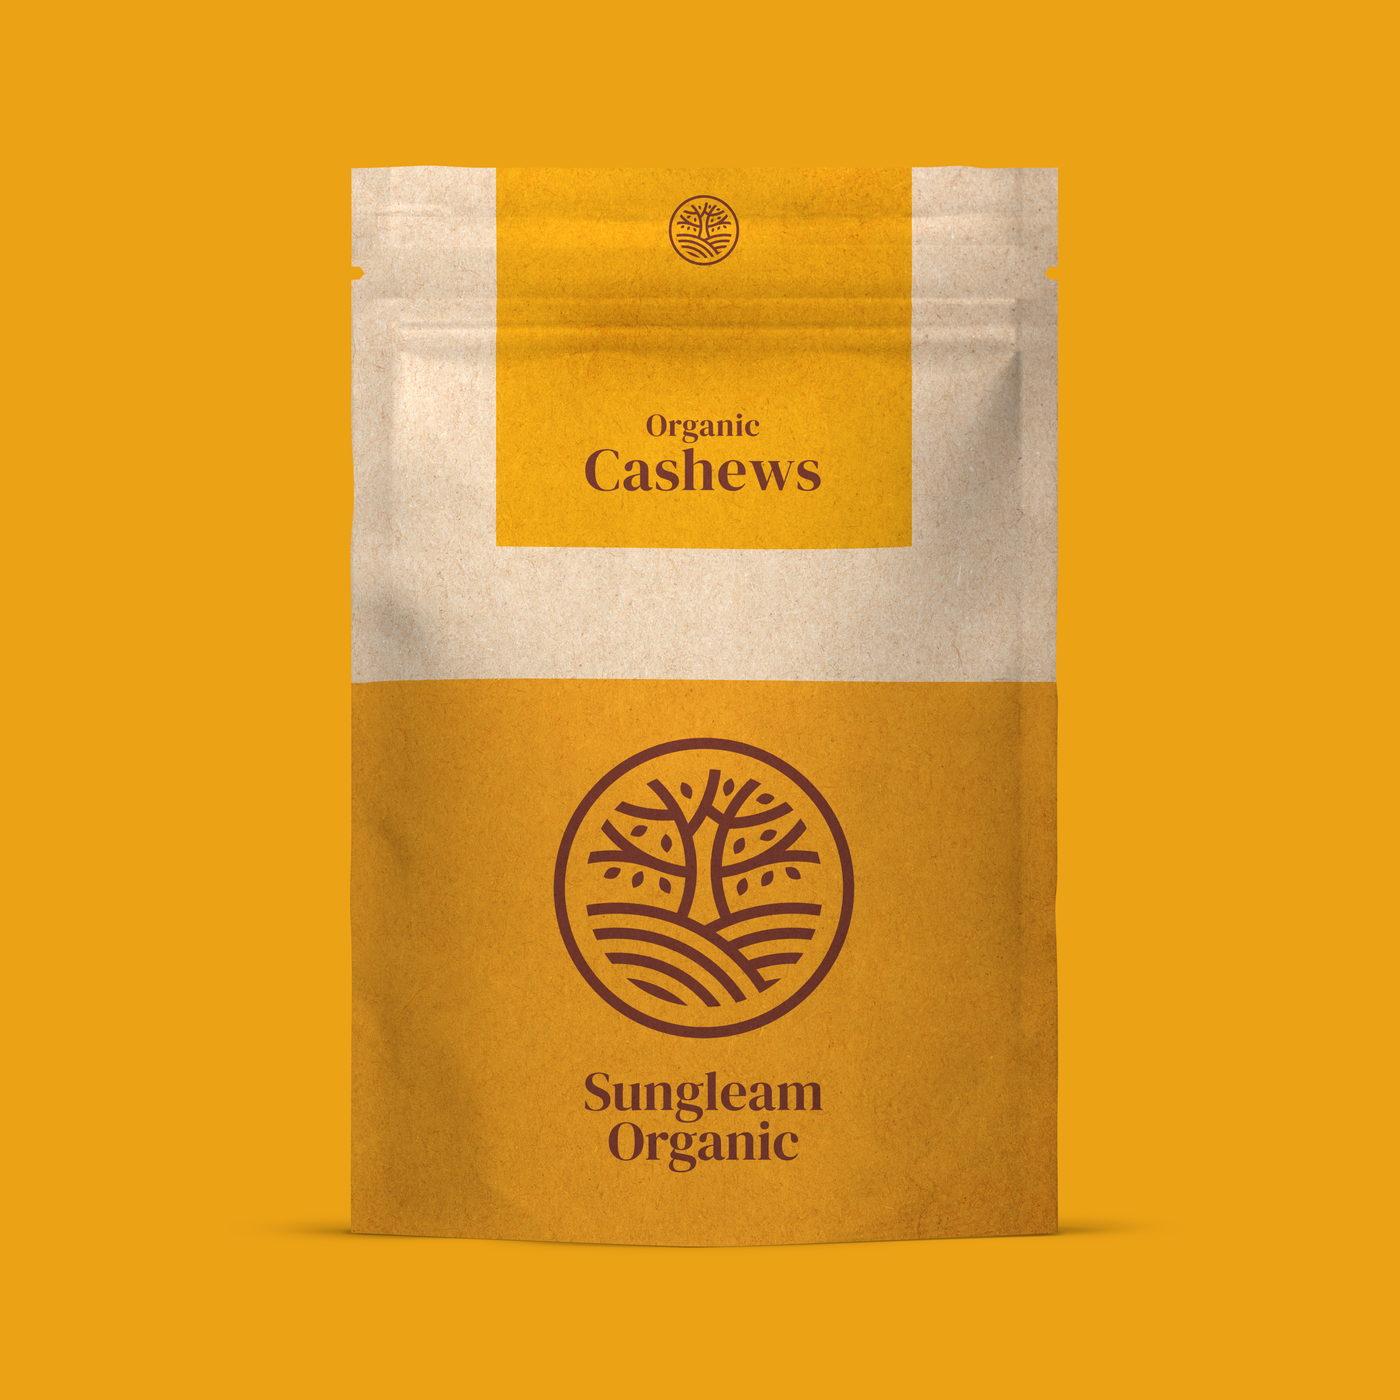 Sungleam Organic Cashew Nuts product